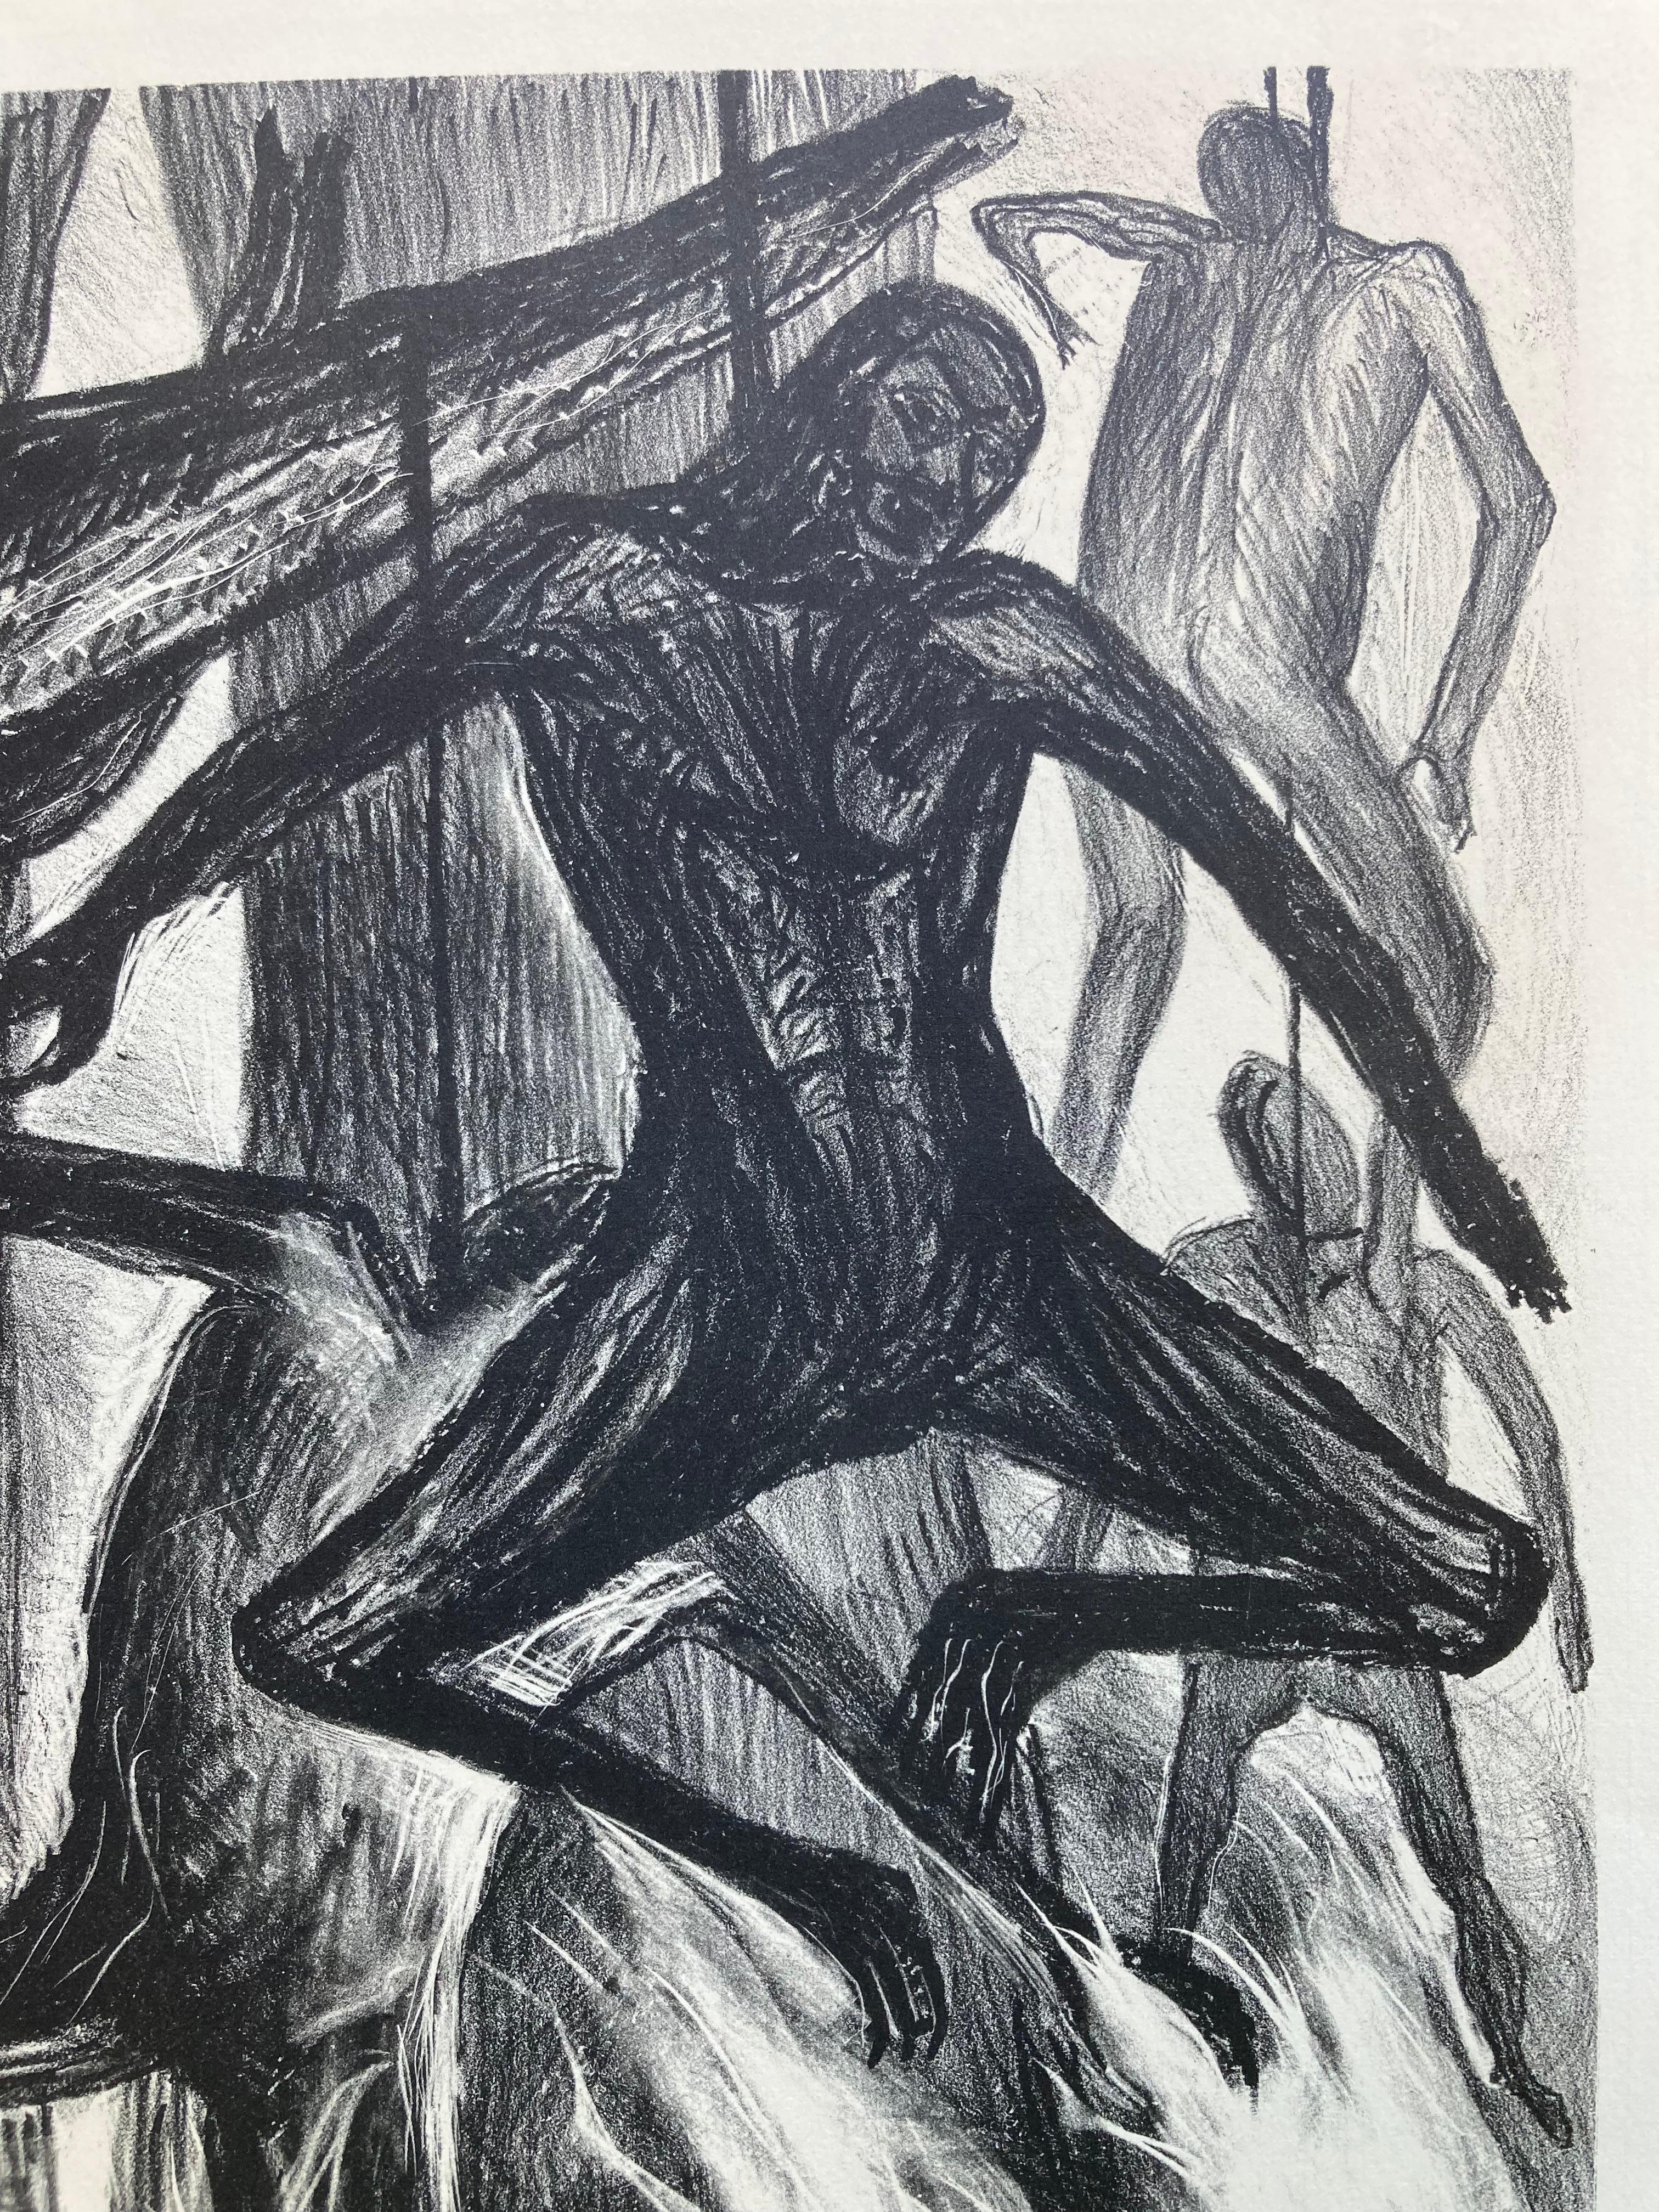 NEGROS COLADOS (Hanged Black Men)  - Realist Print by Jose Clemente Orozco